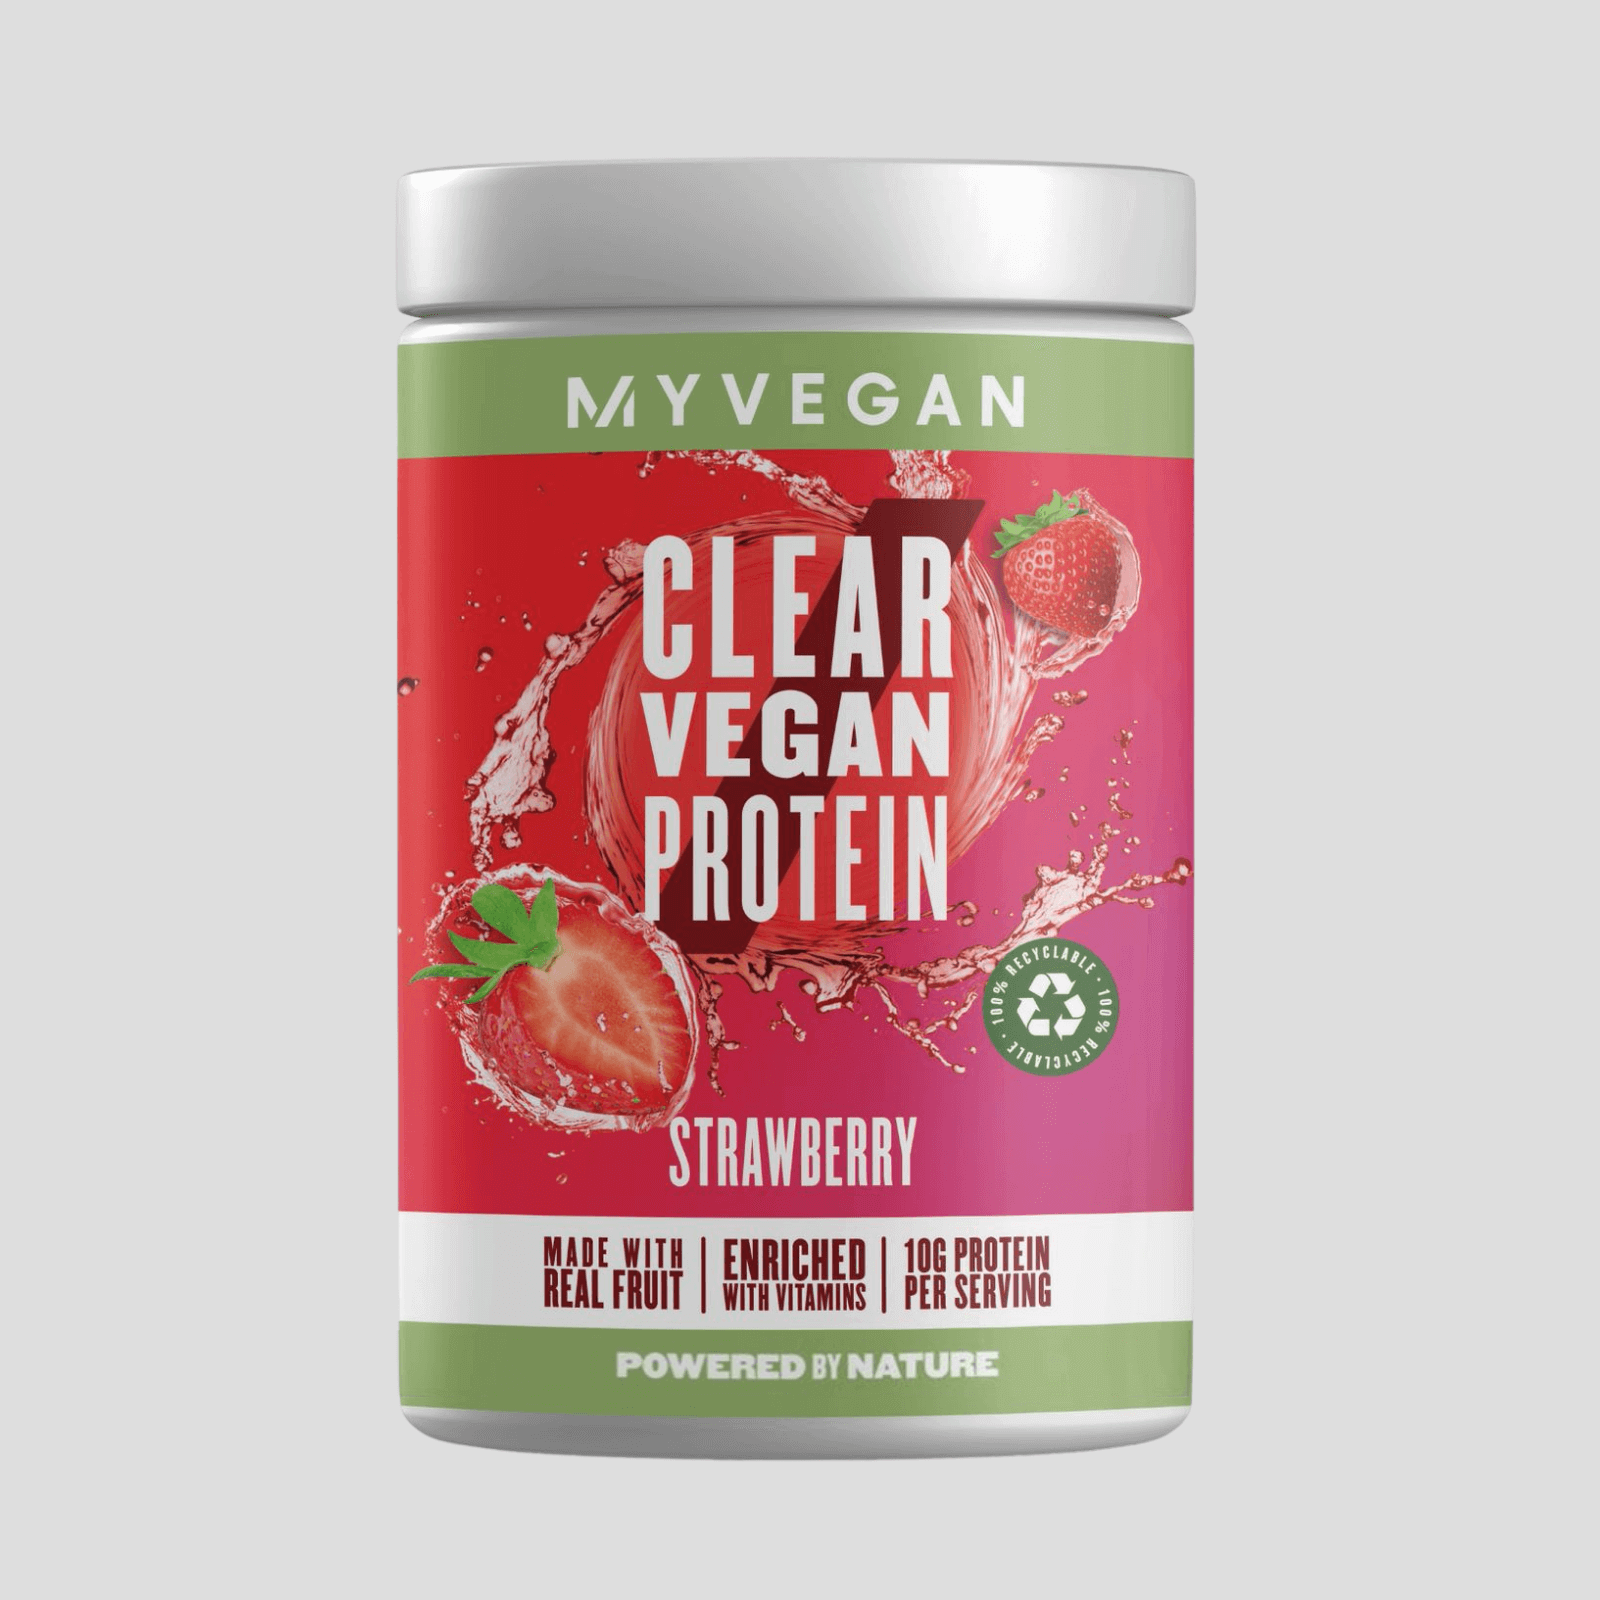 Myvegan - Clear vegan protein - 40raciones - fresa